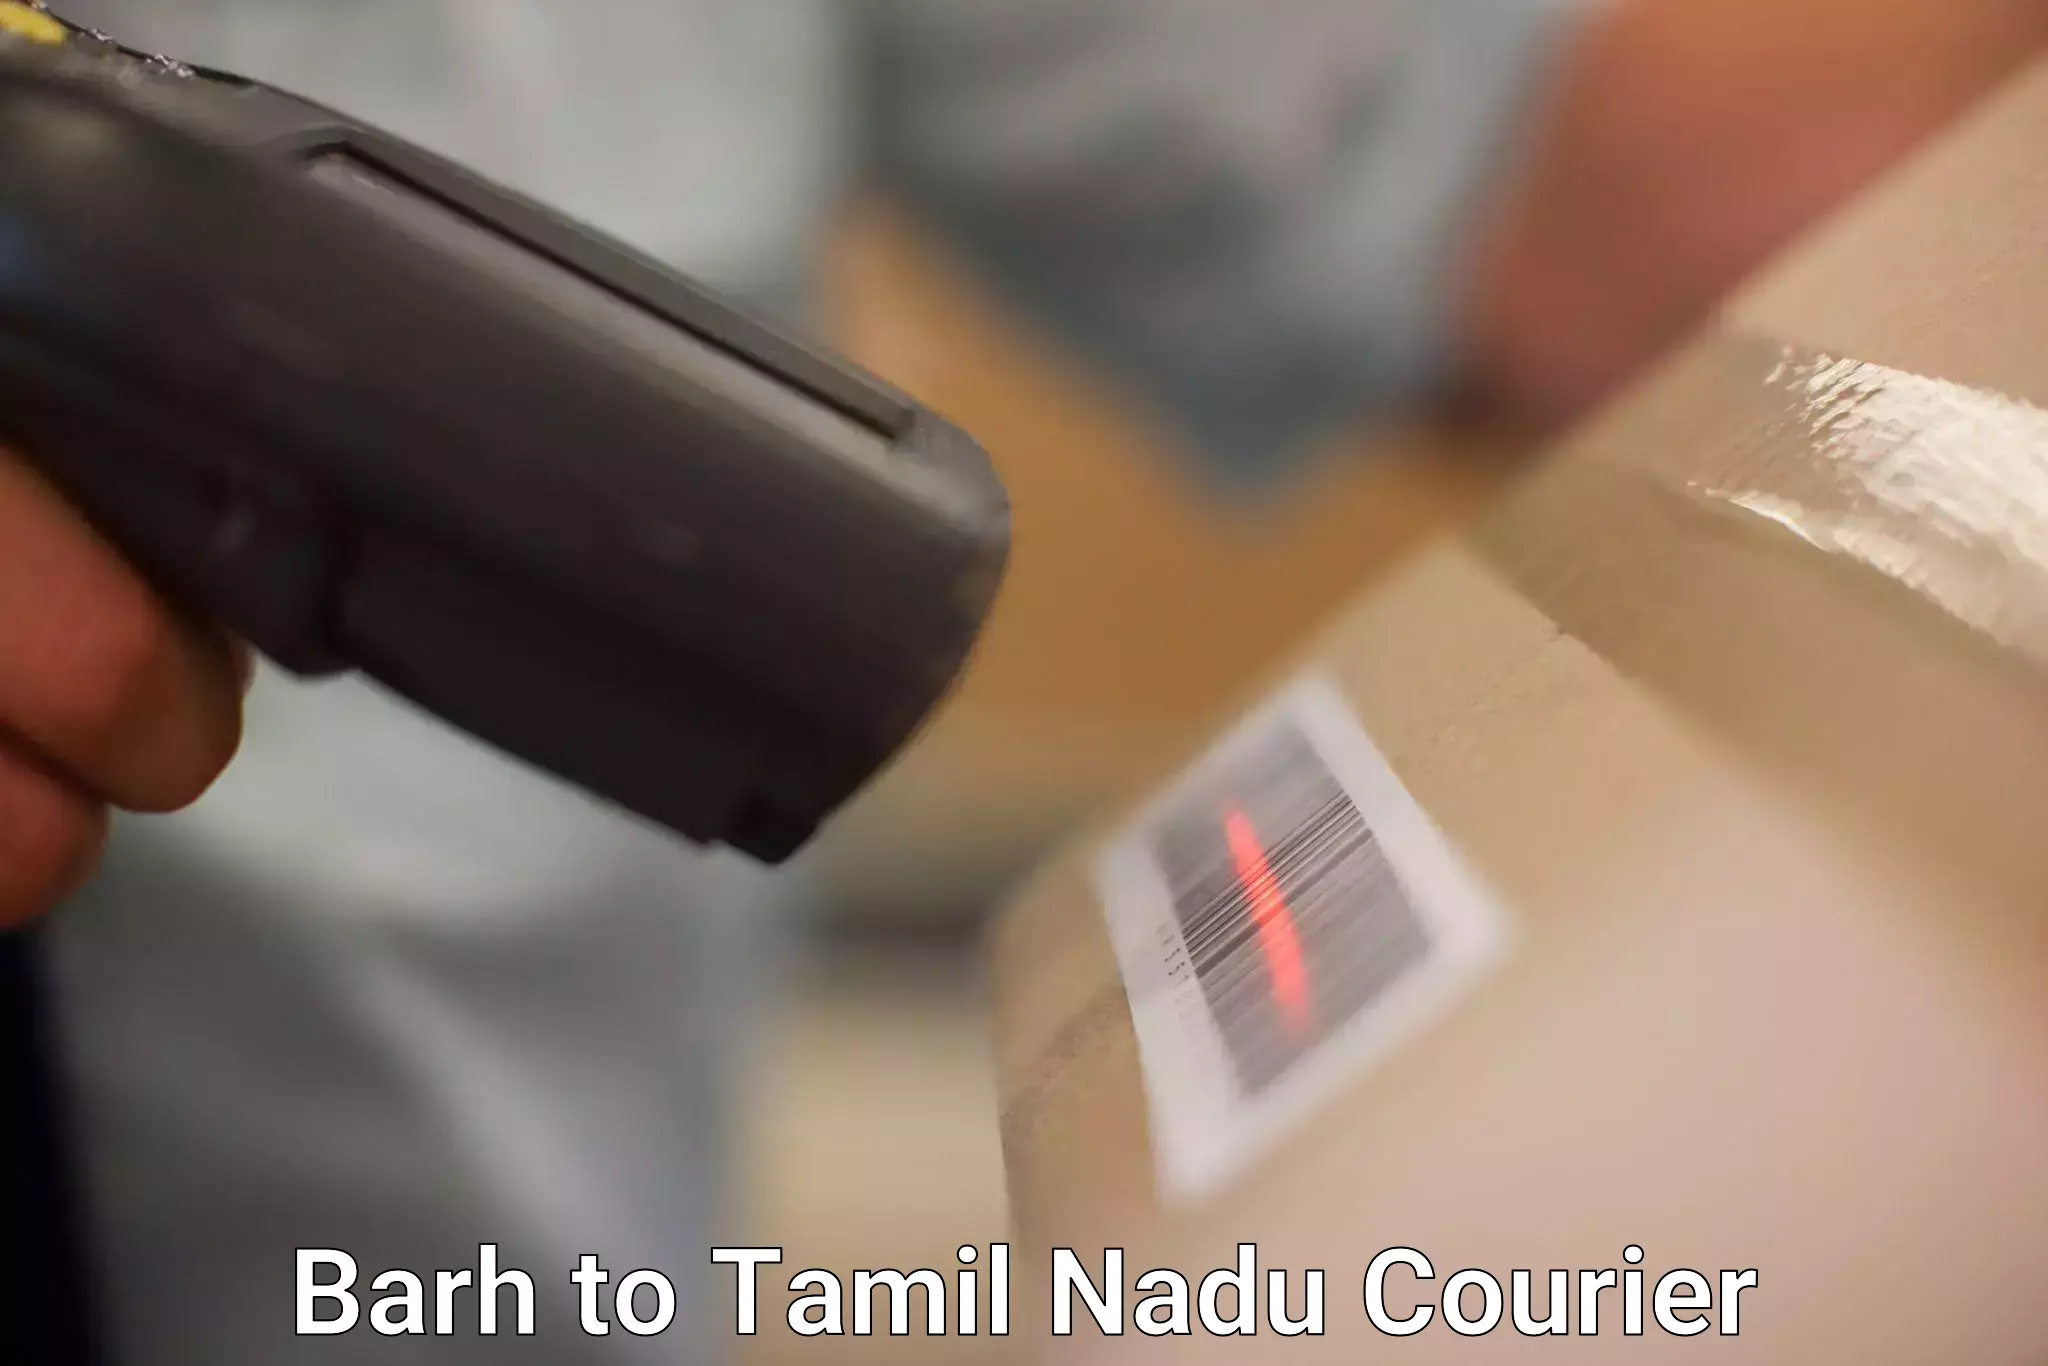 Courier service innovation Barh to Tamil Nadu